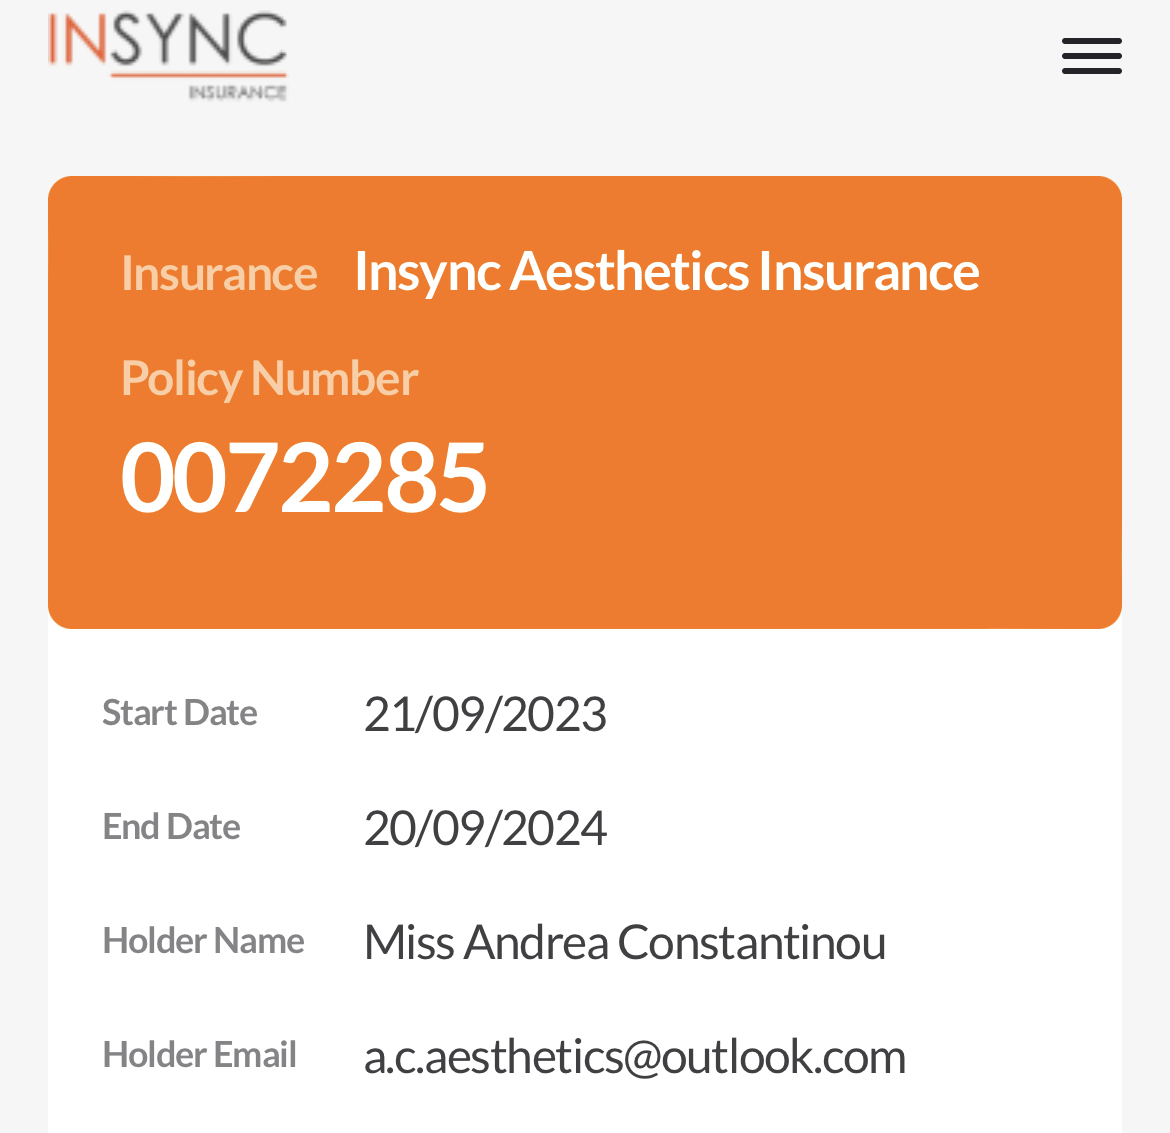 Insync Aesthetics Insurance